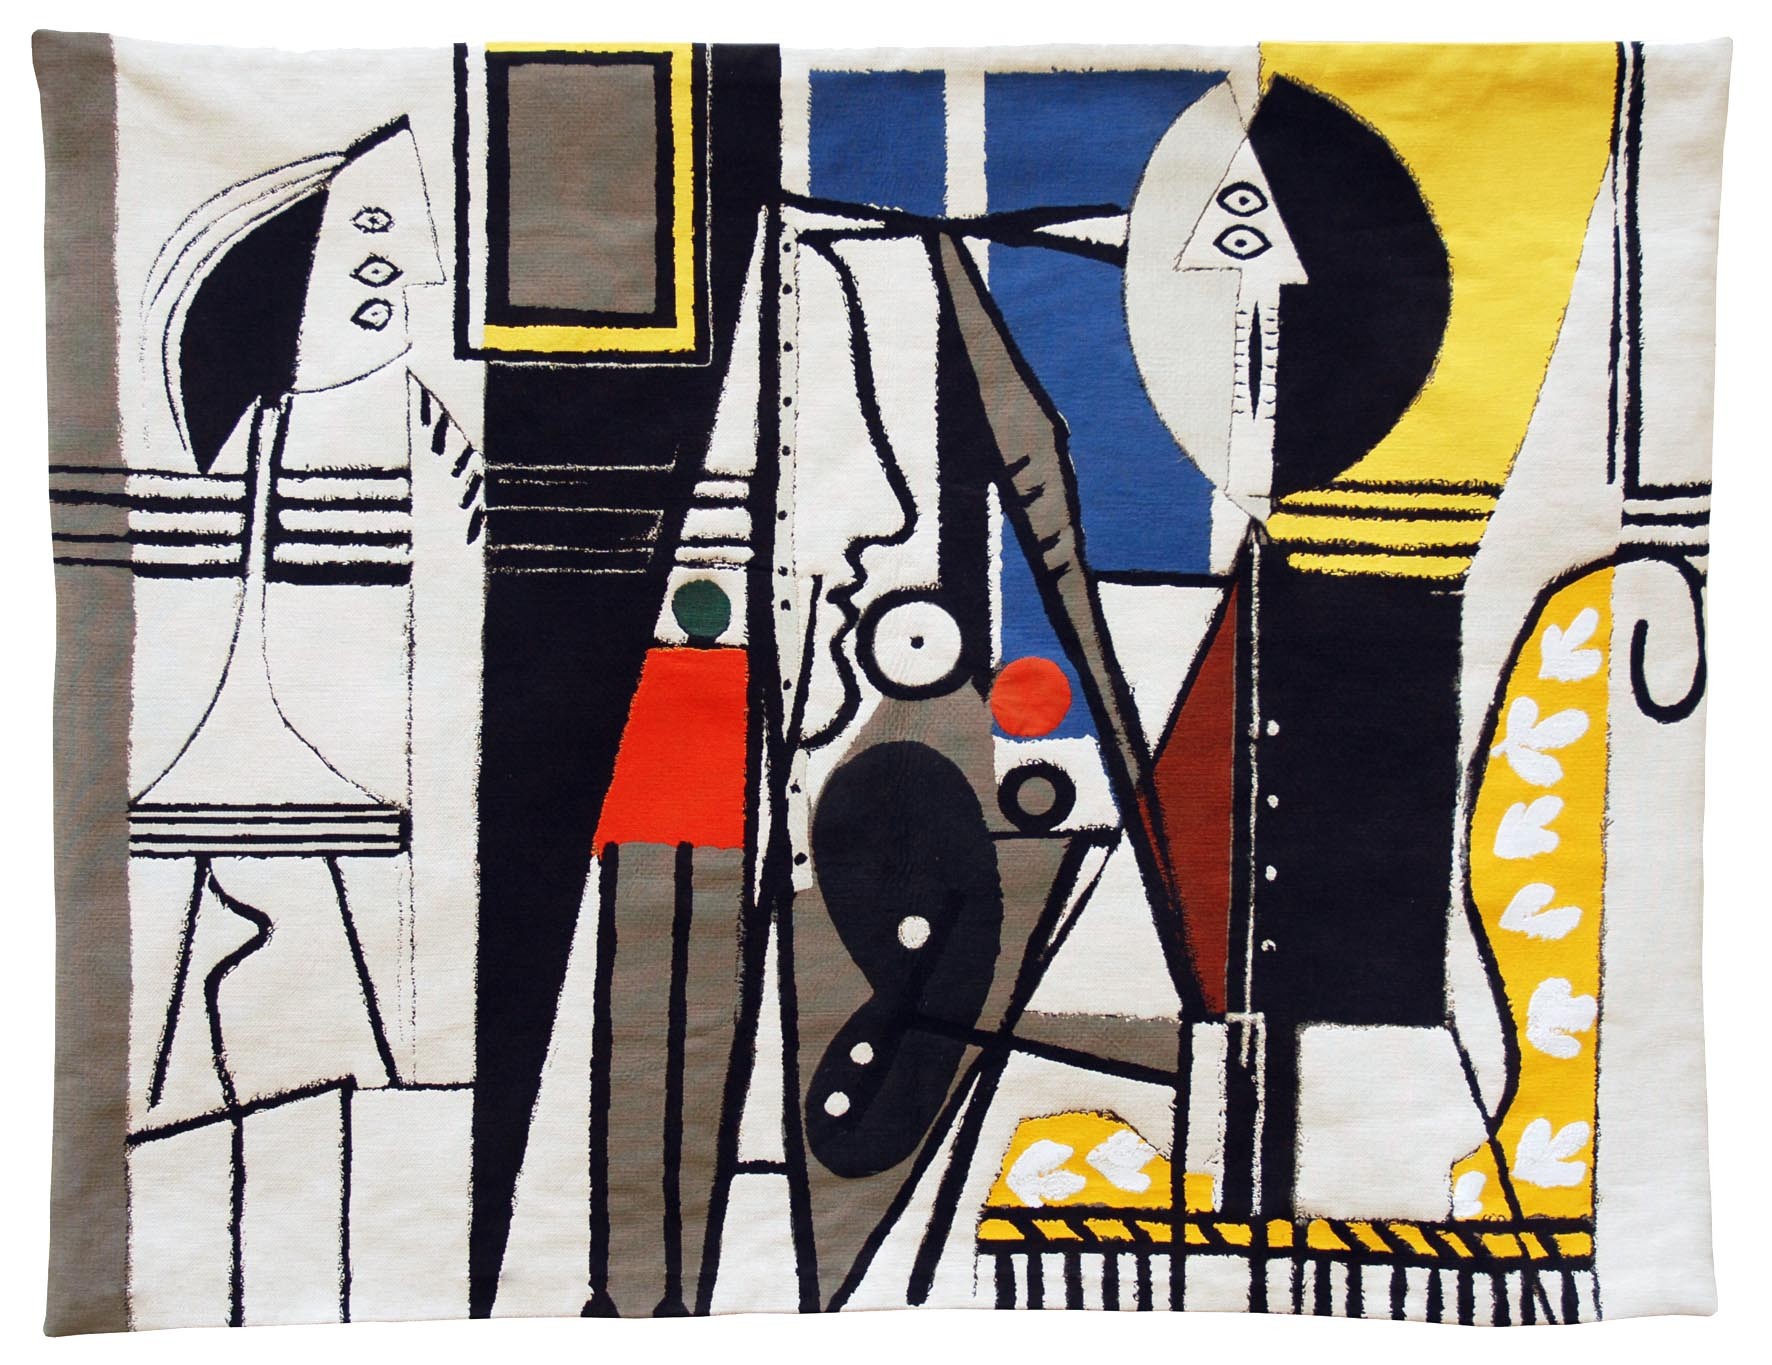 Художник постер. Пабло Пикассо художник. Художники кубисты Пабло Пикассо. Пабло Пикассо художник и его модель 1928. Пикассо картина художника кубизма.